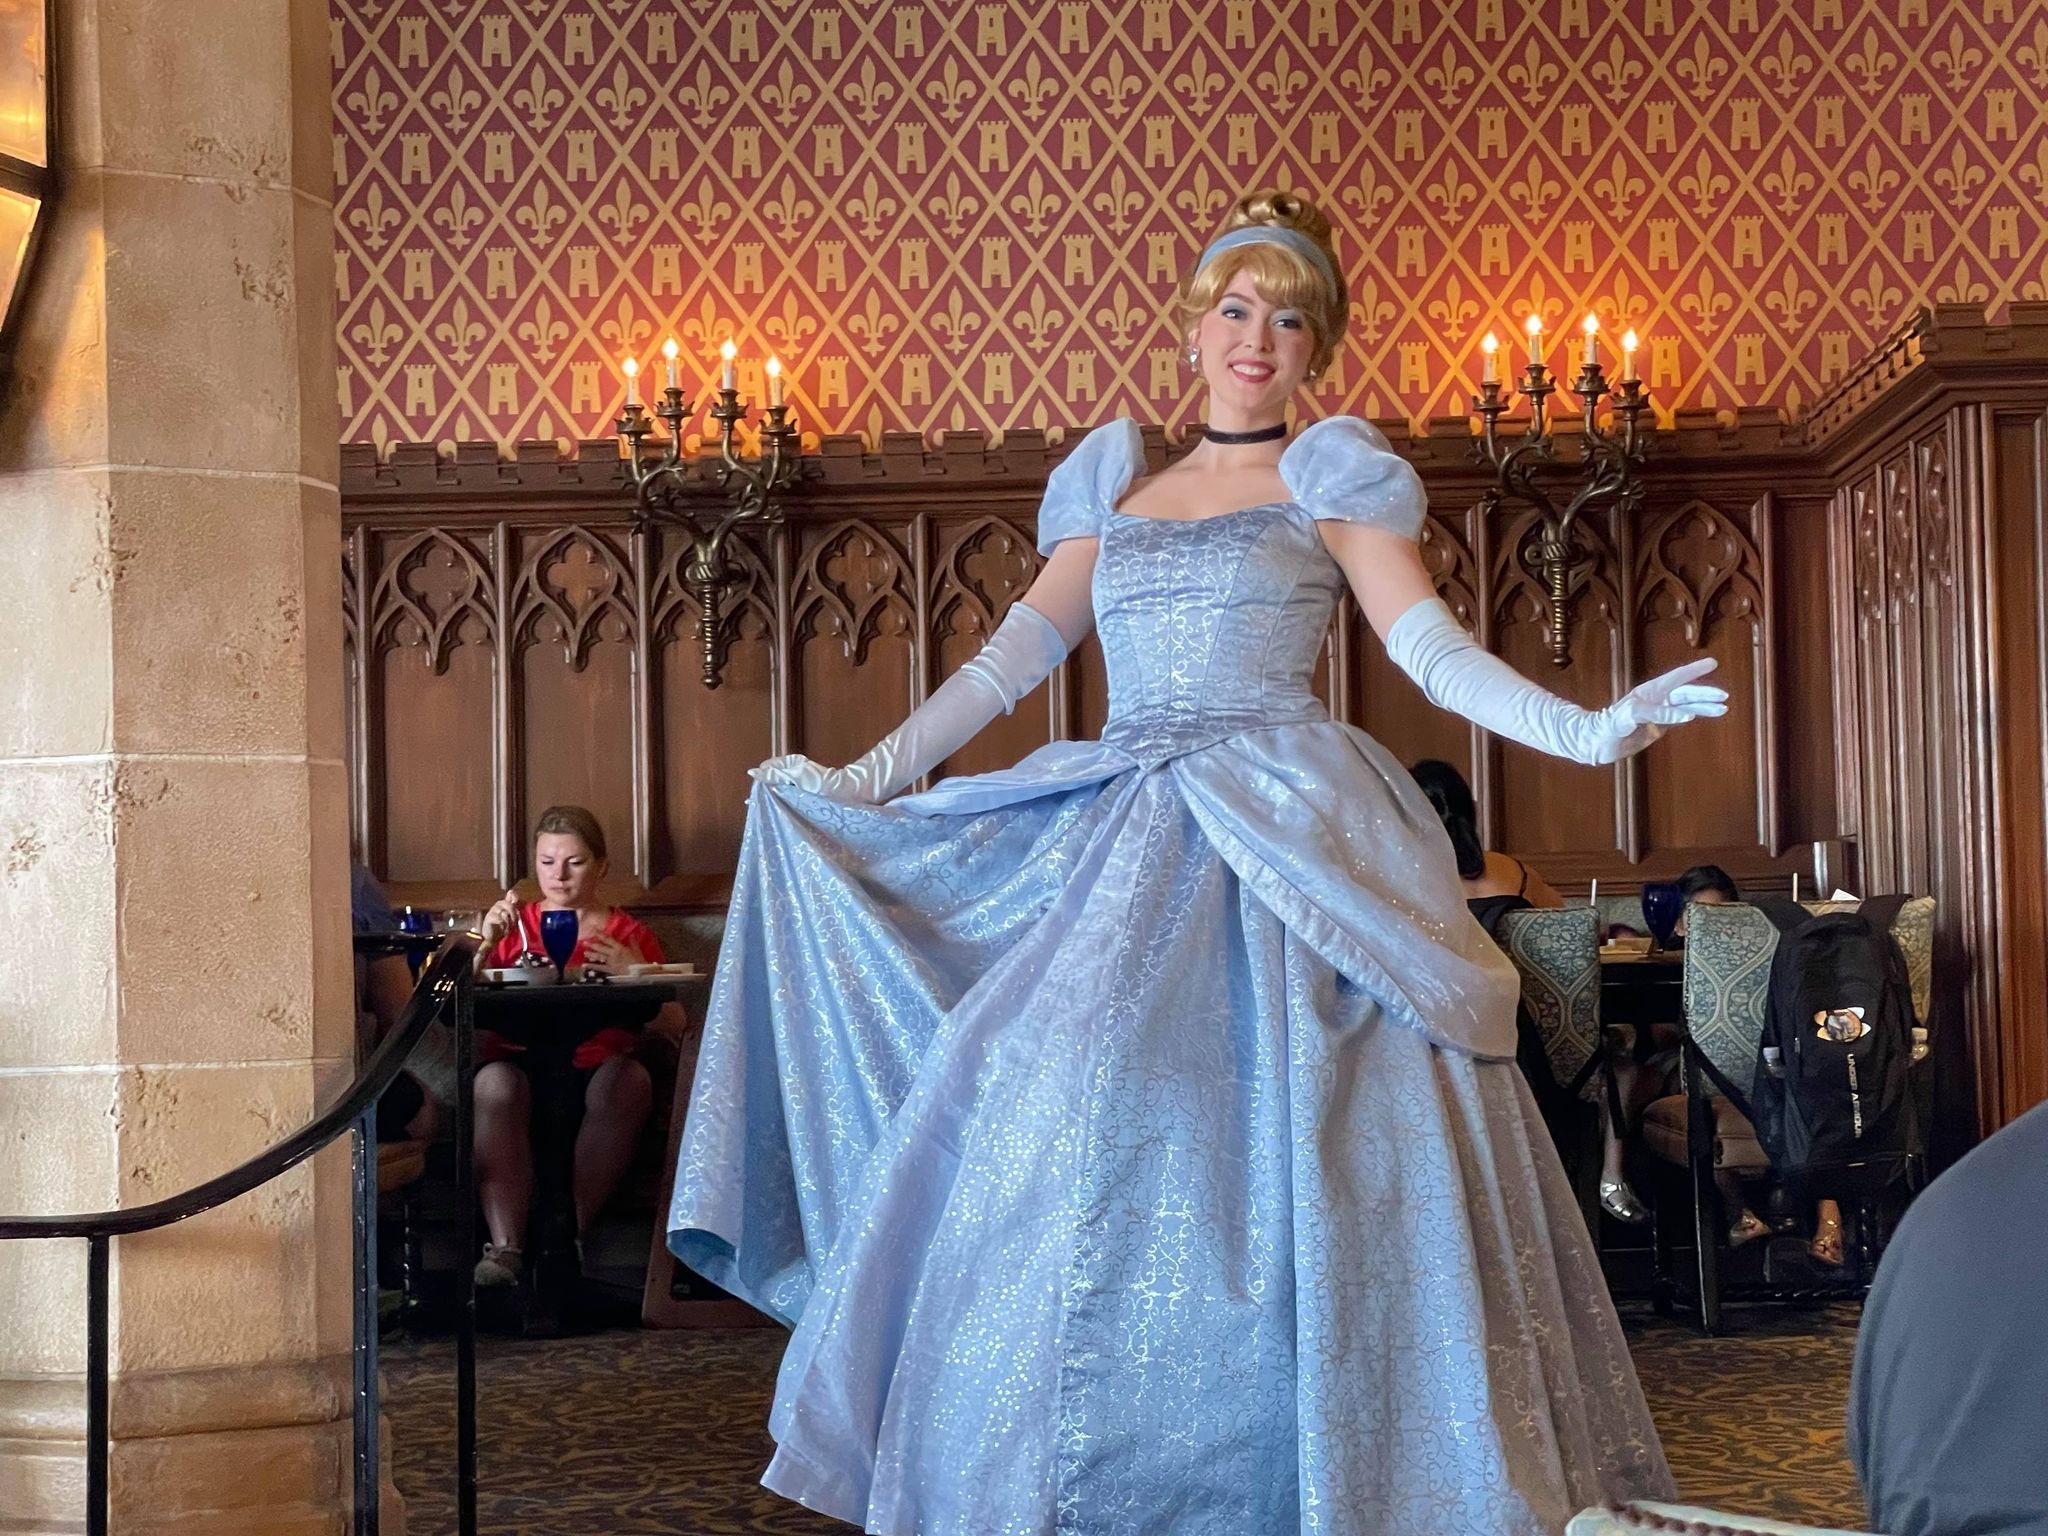 Cinderella greeting guests